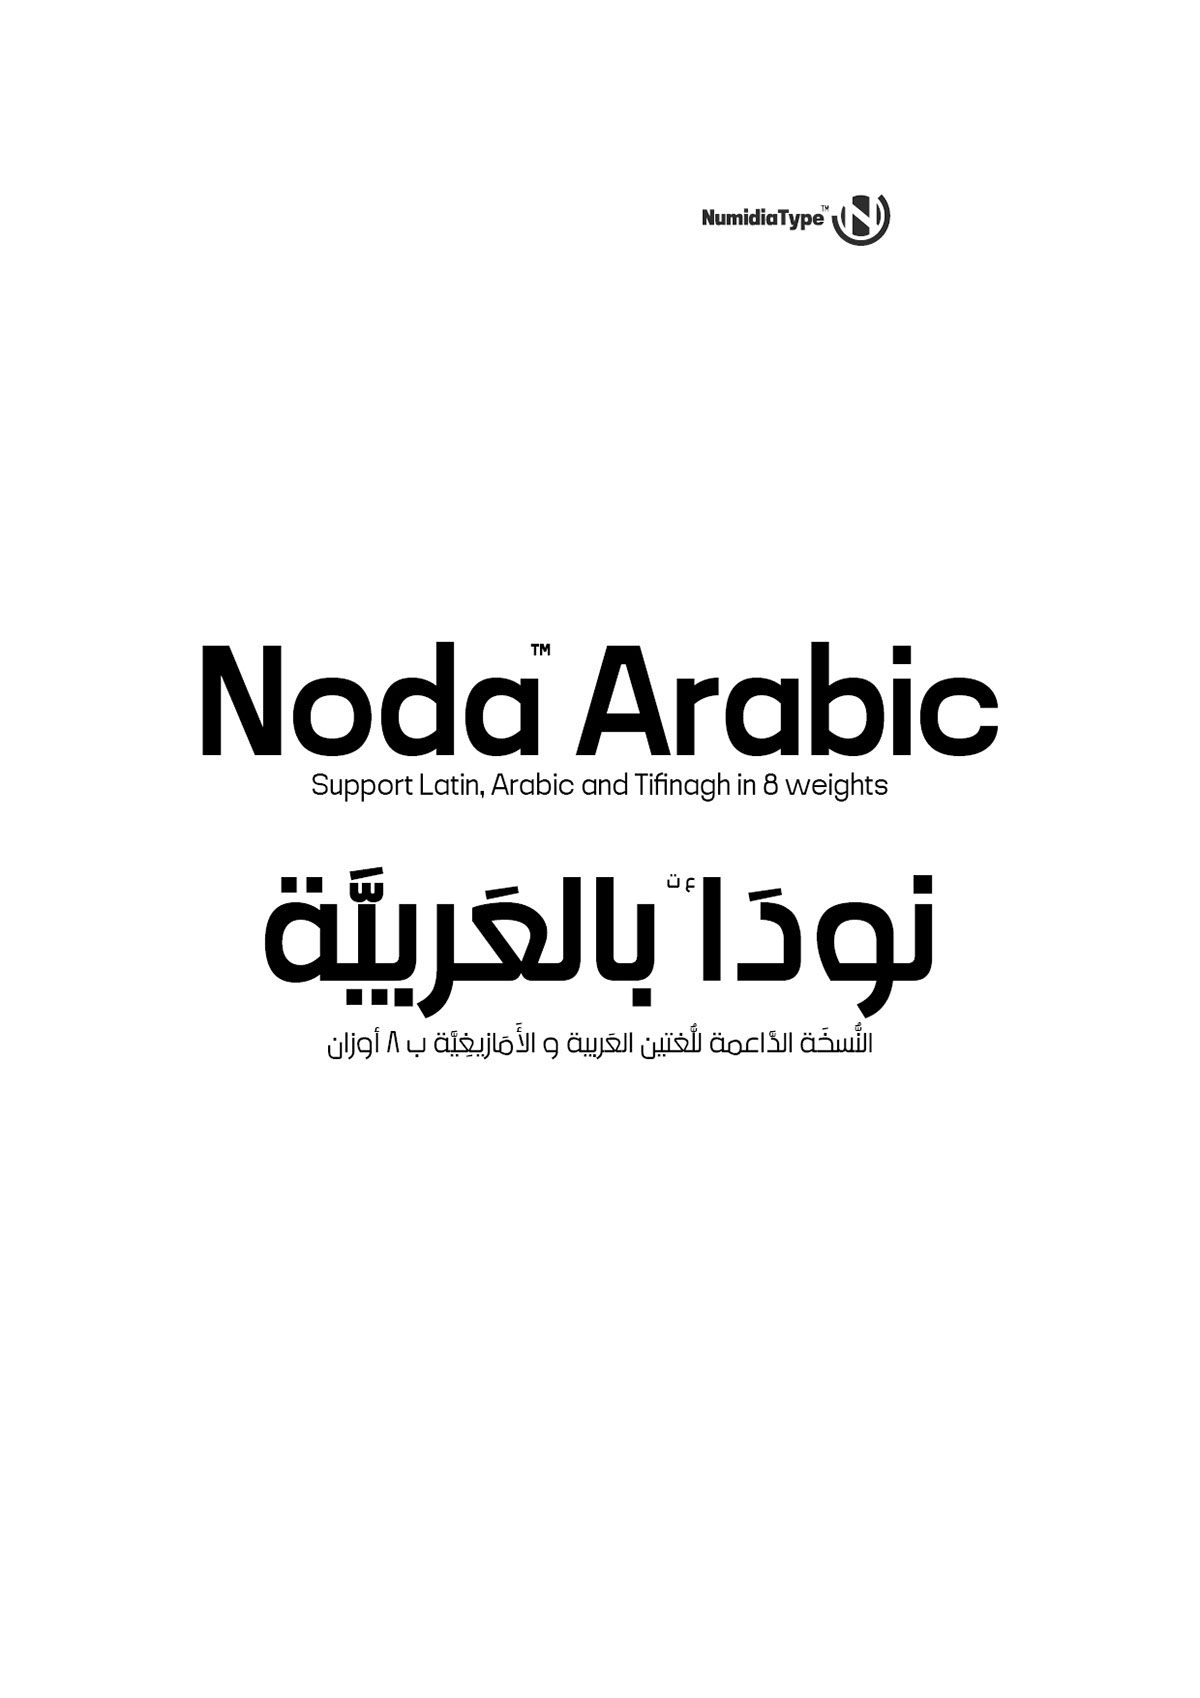 Noda Arabic Specimen rendition image